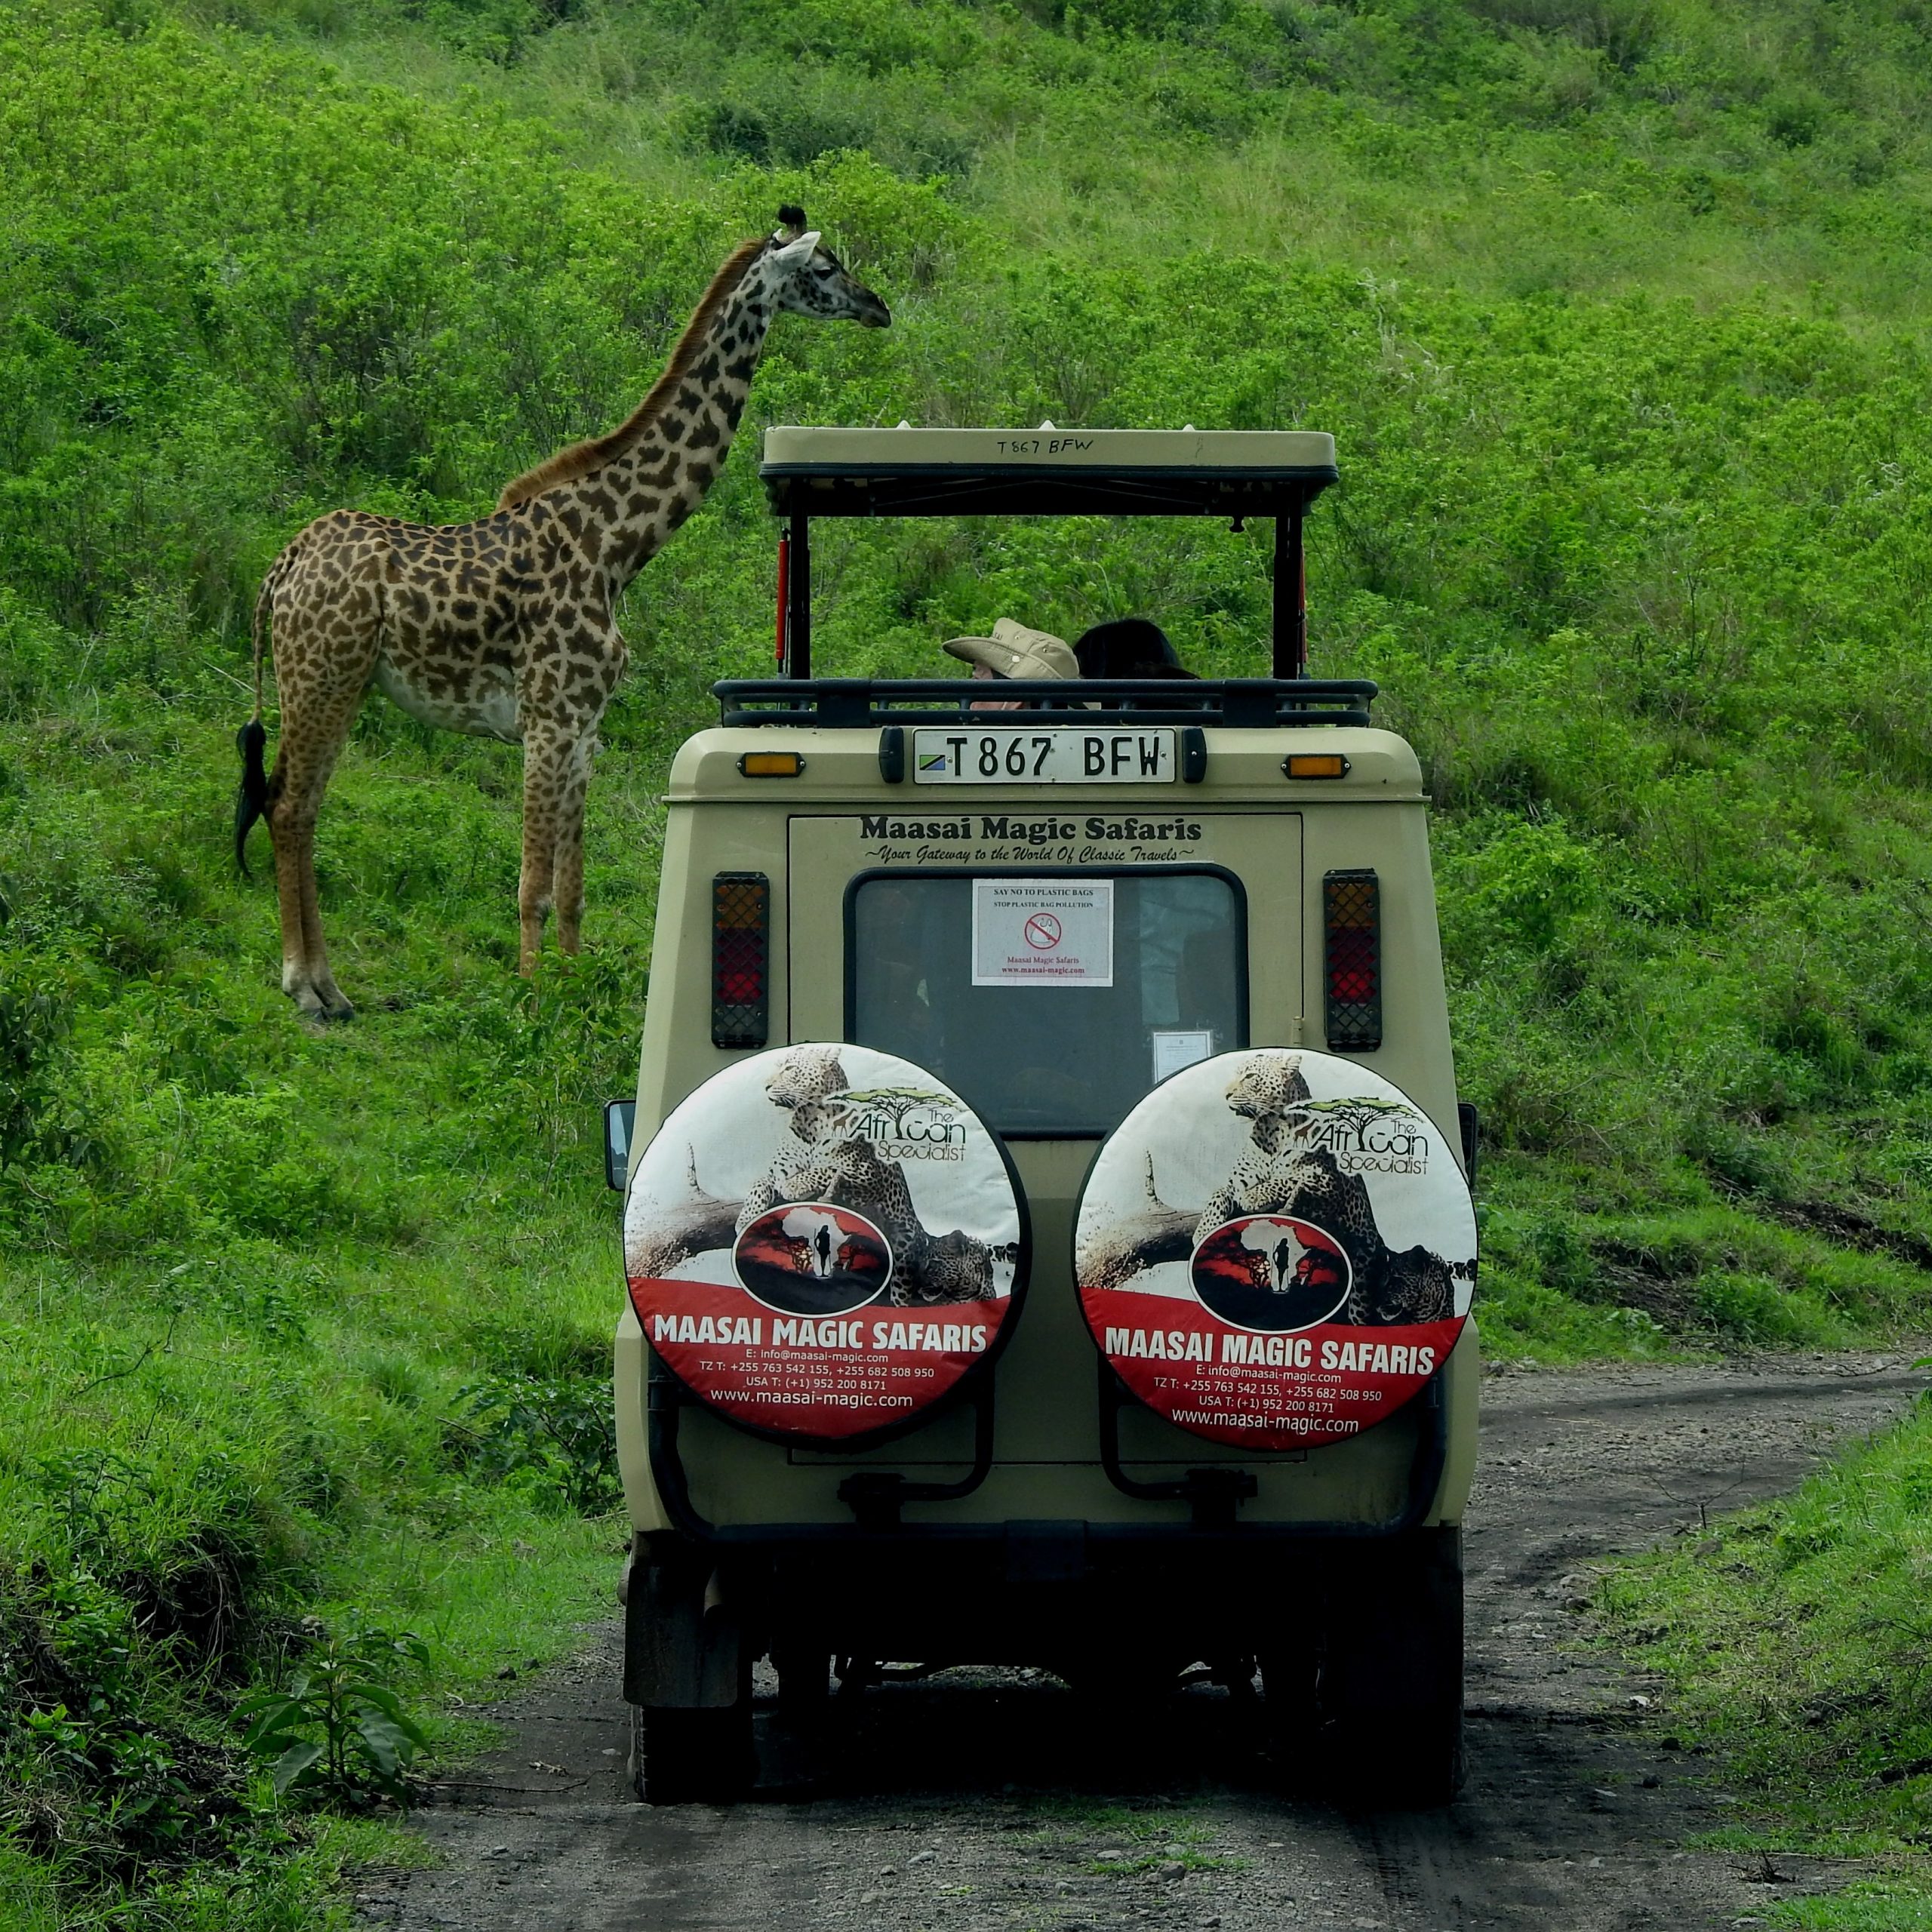 Day 7 Serengeti National Park